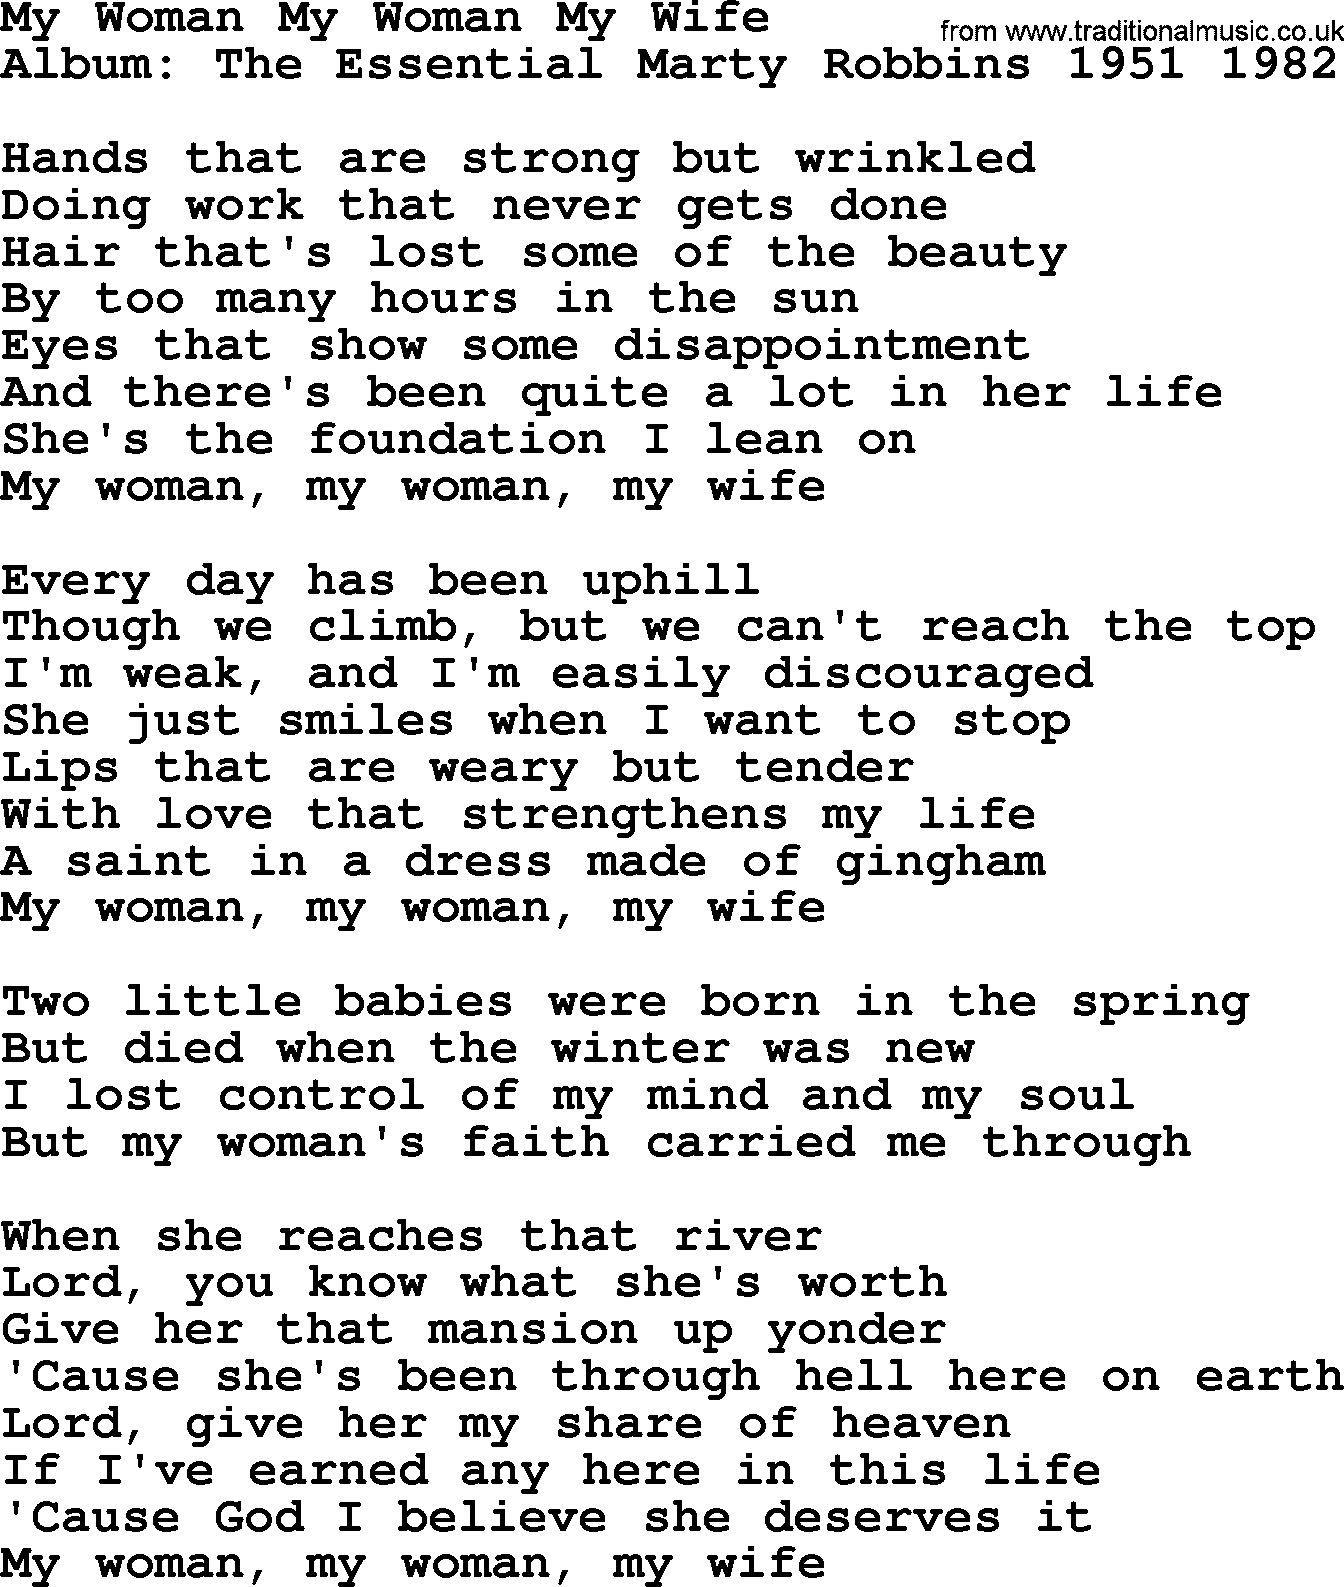 Marty Robbins song: My Woman My Woman My Wife, lyrics